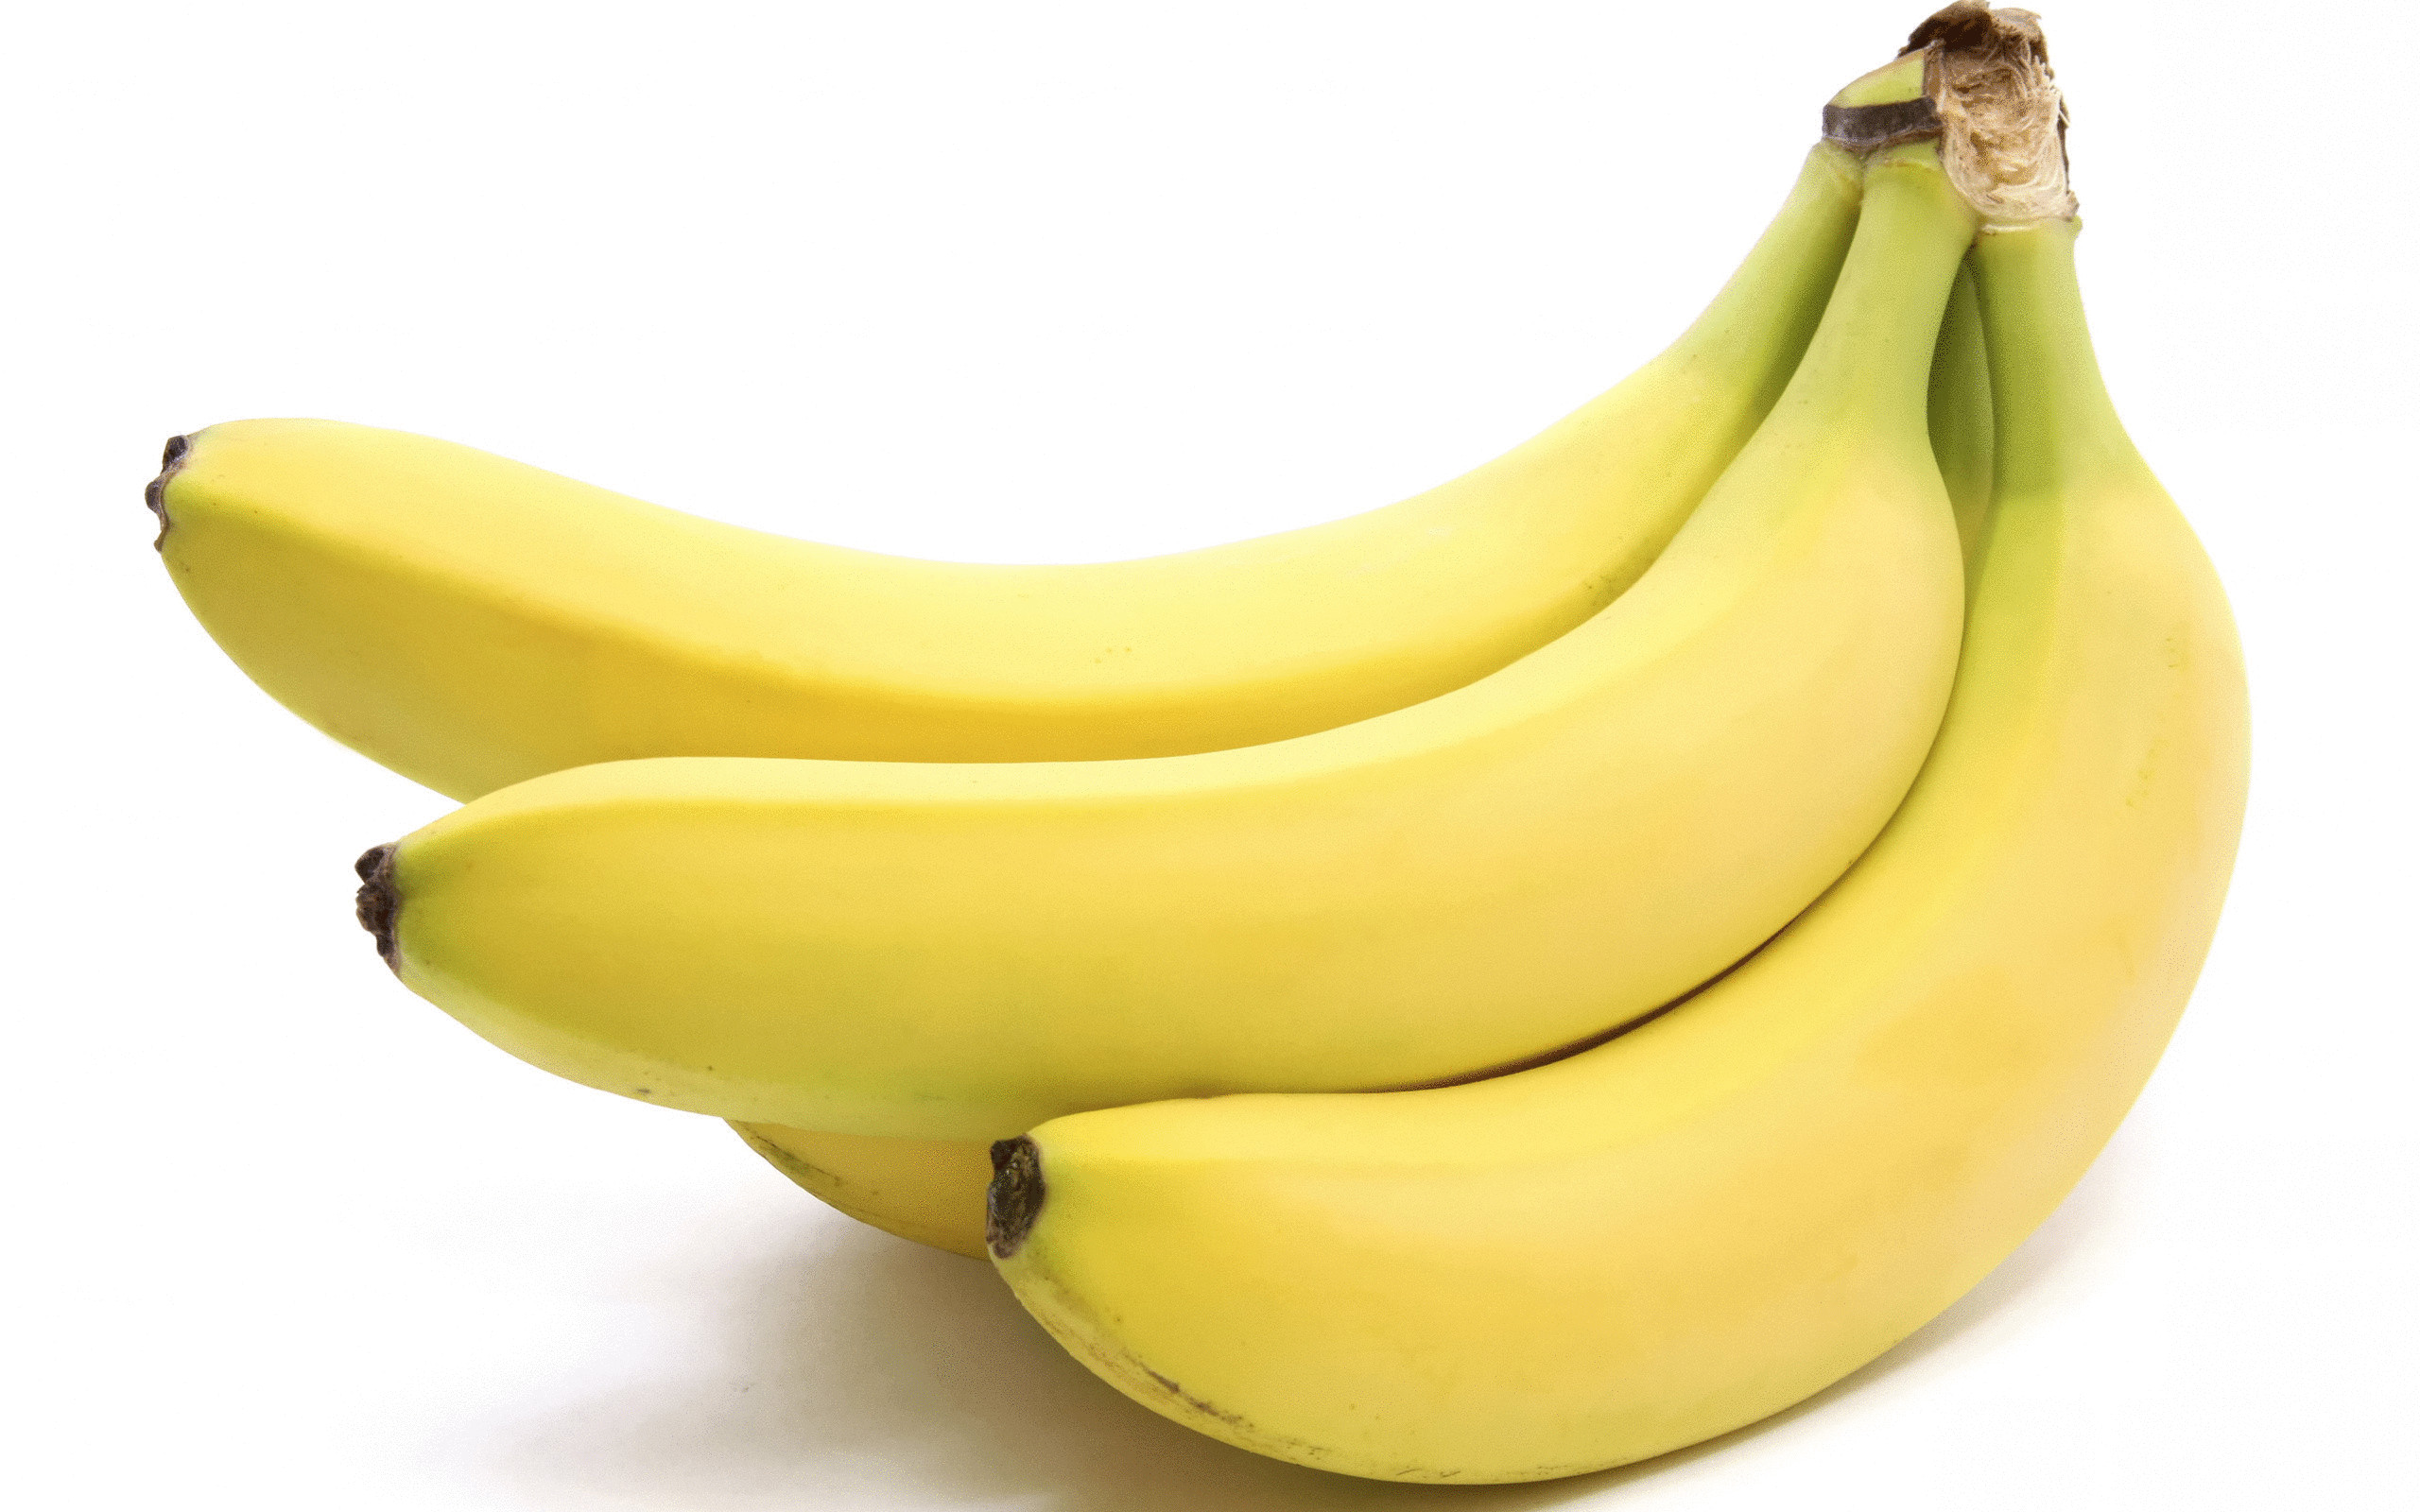 Интересные факты о бананах